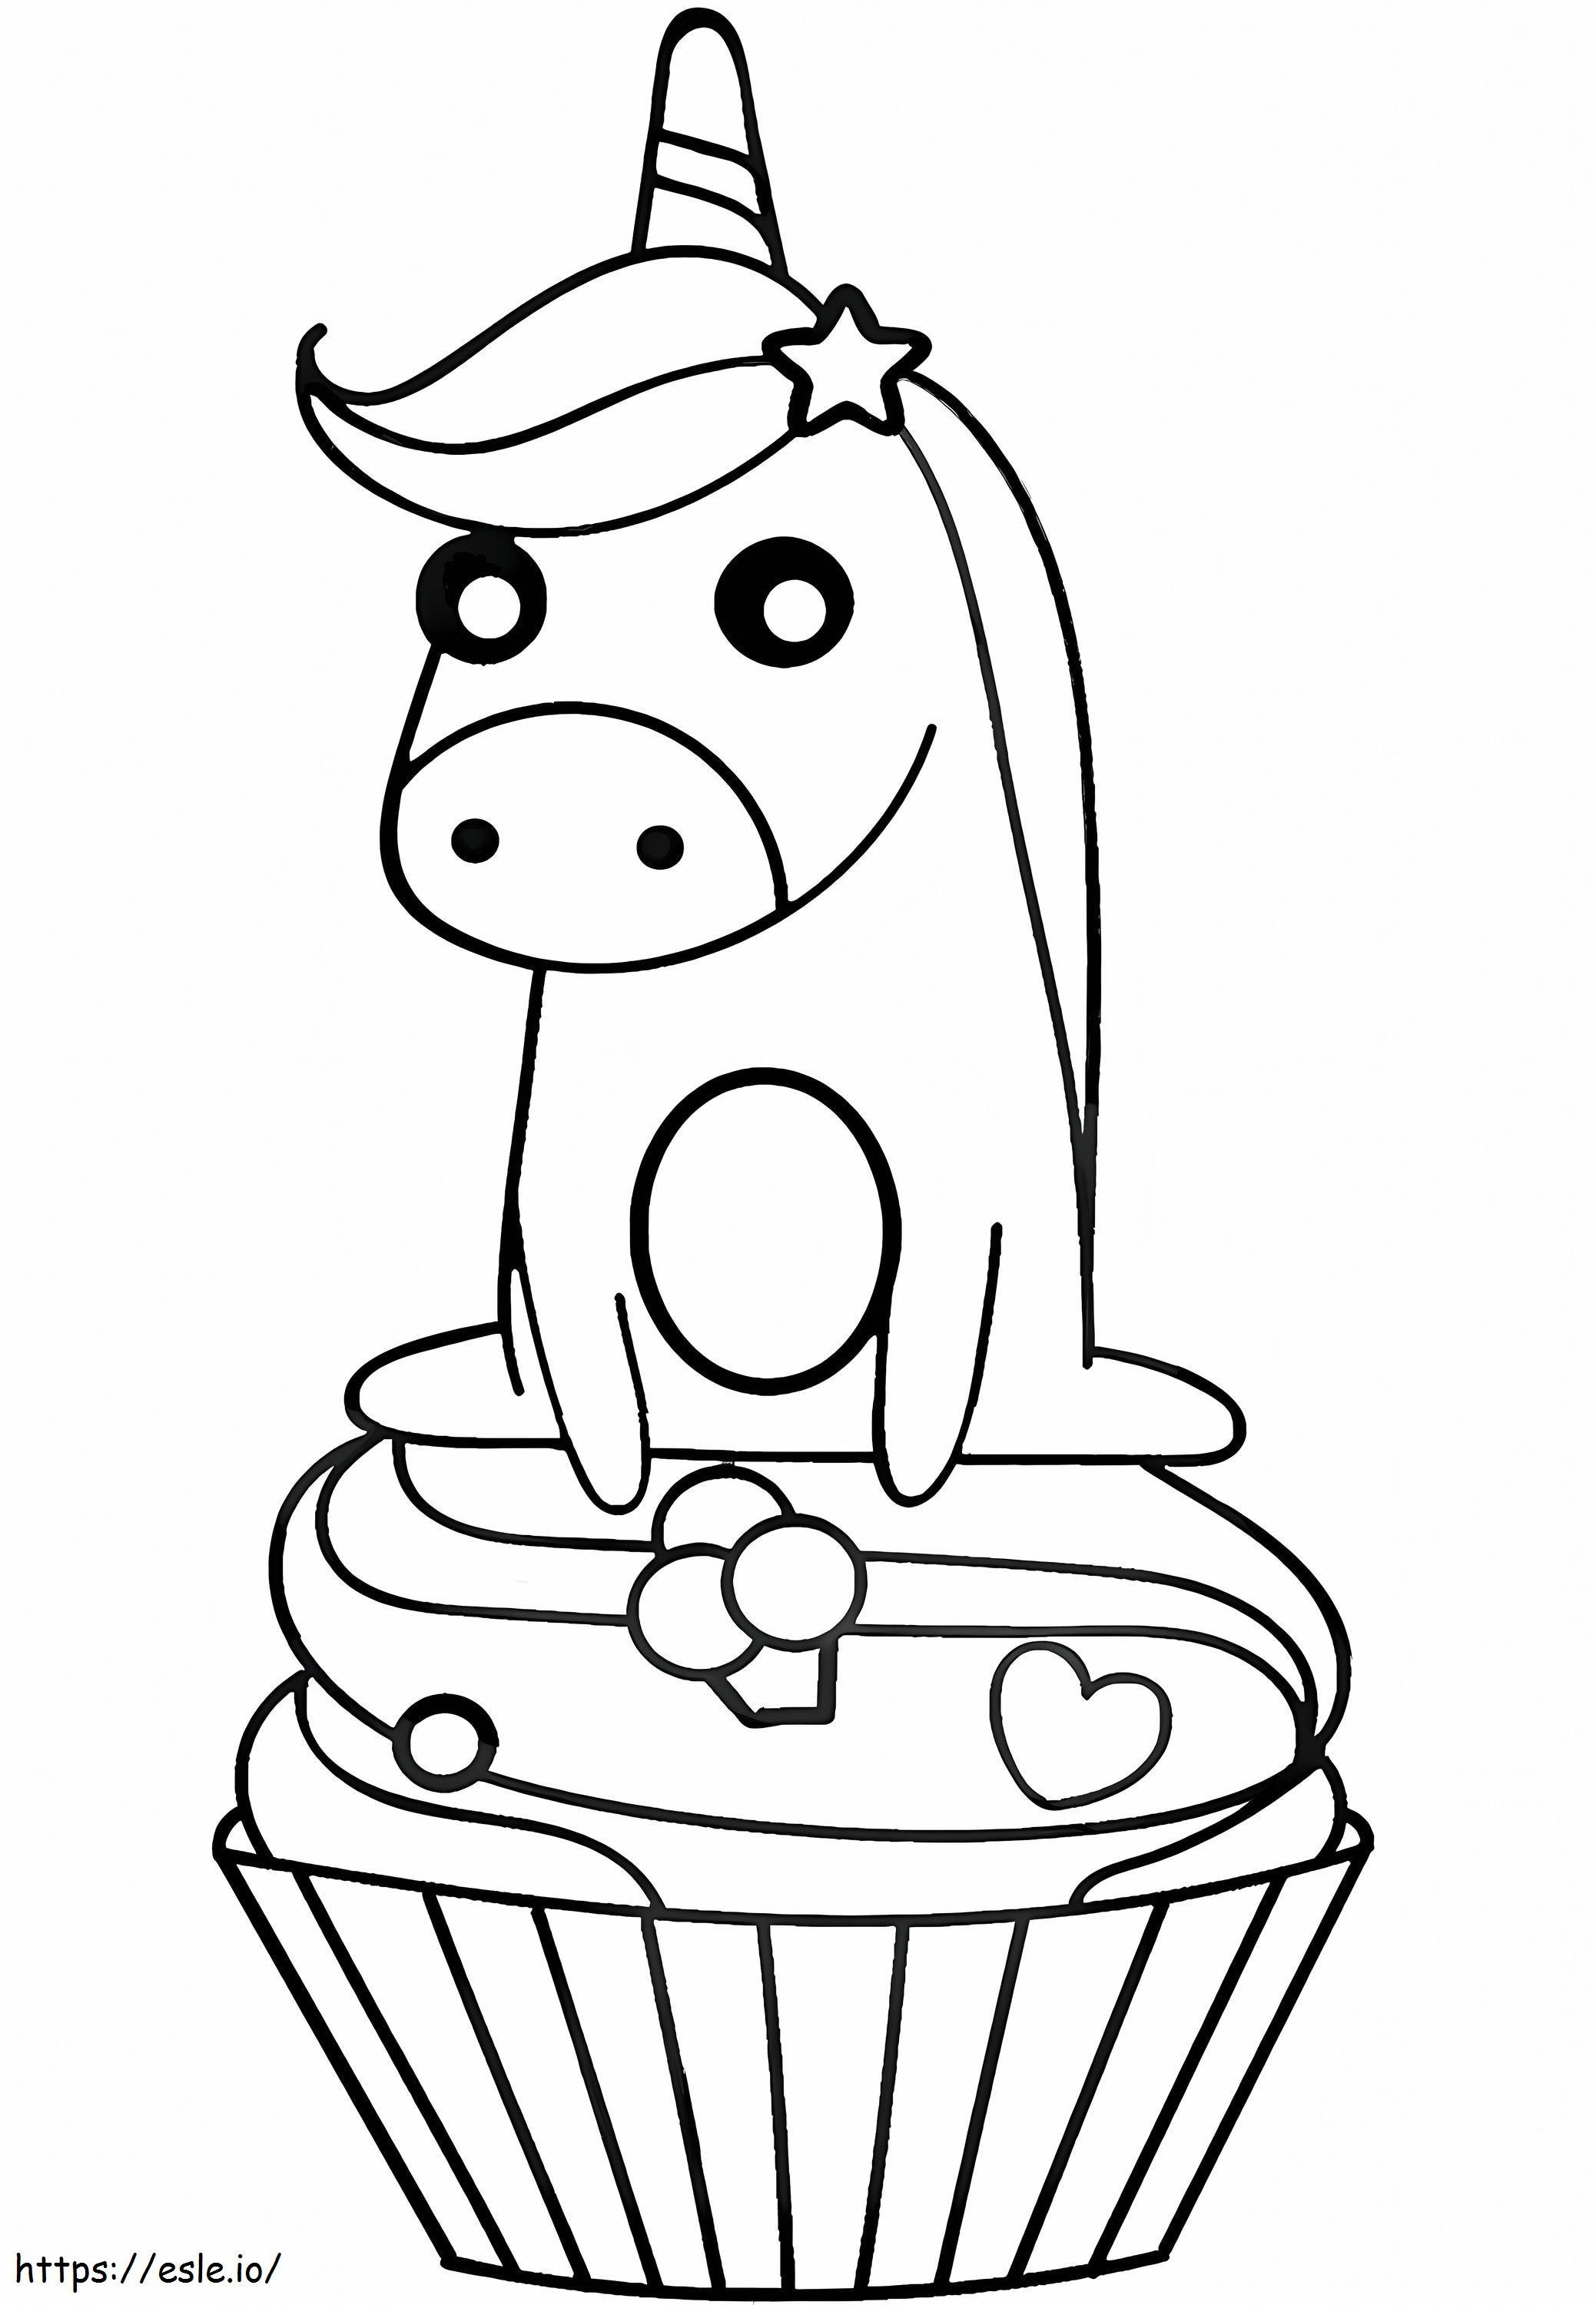 1563239040 Unicorn Cupcake A4 coloring page